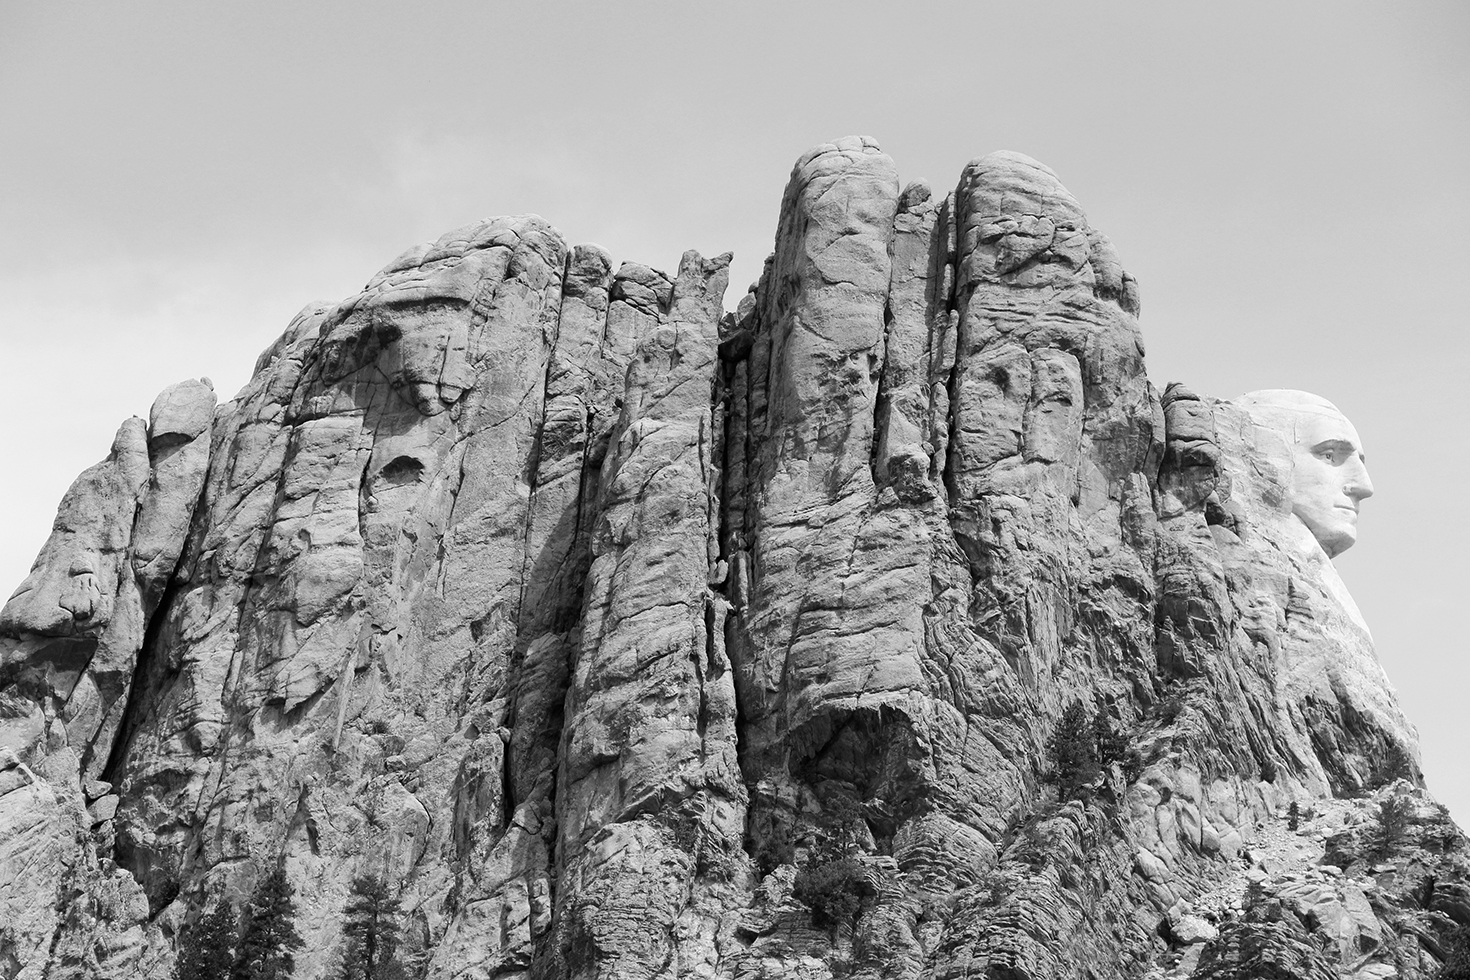 Mount Rushmore | Sturgis, South Dakota